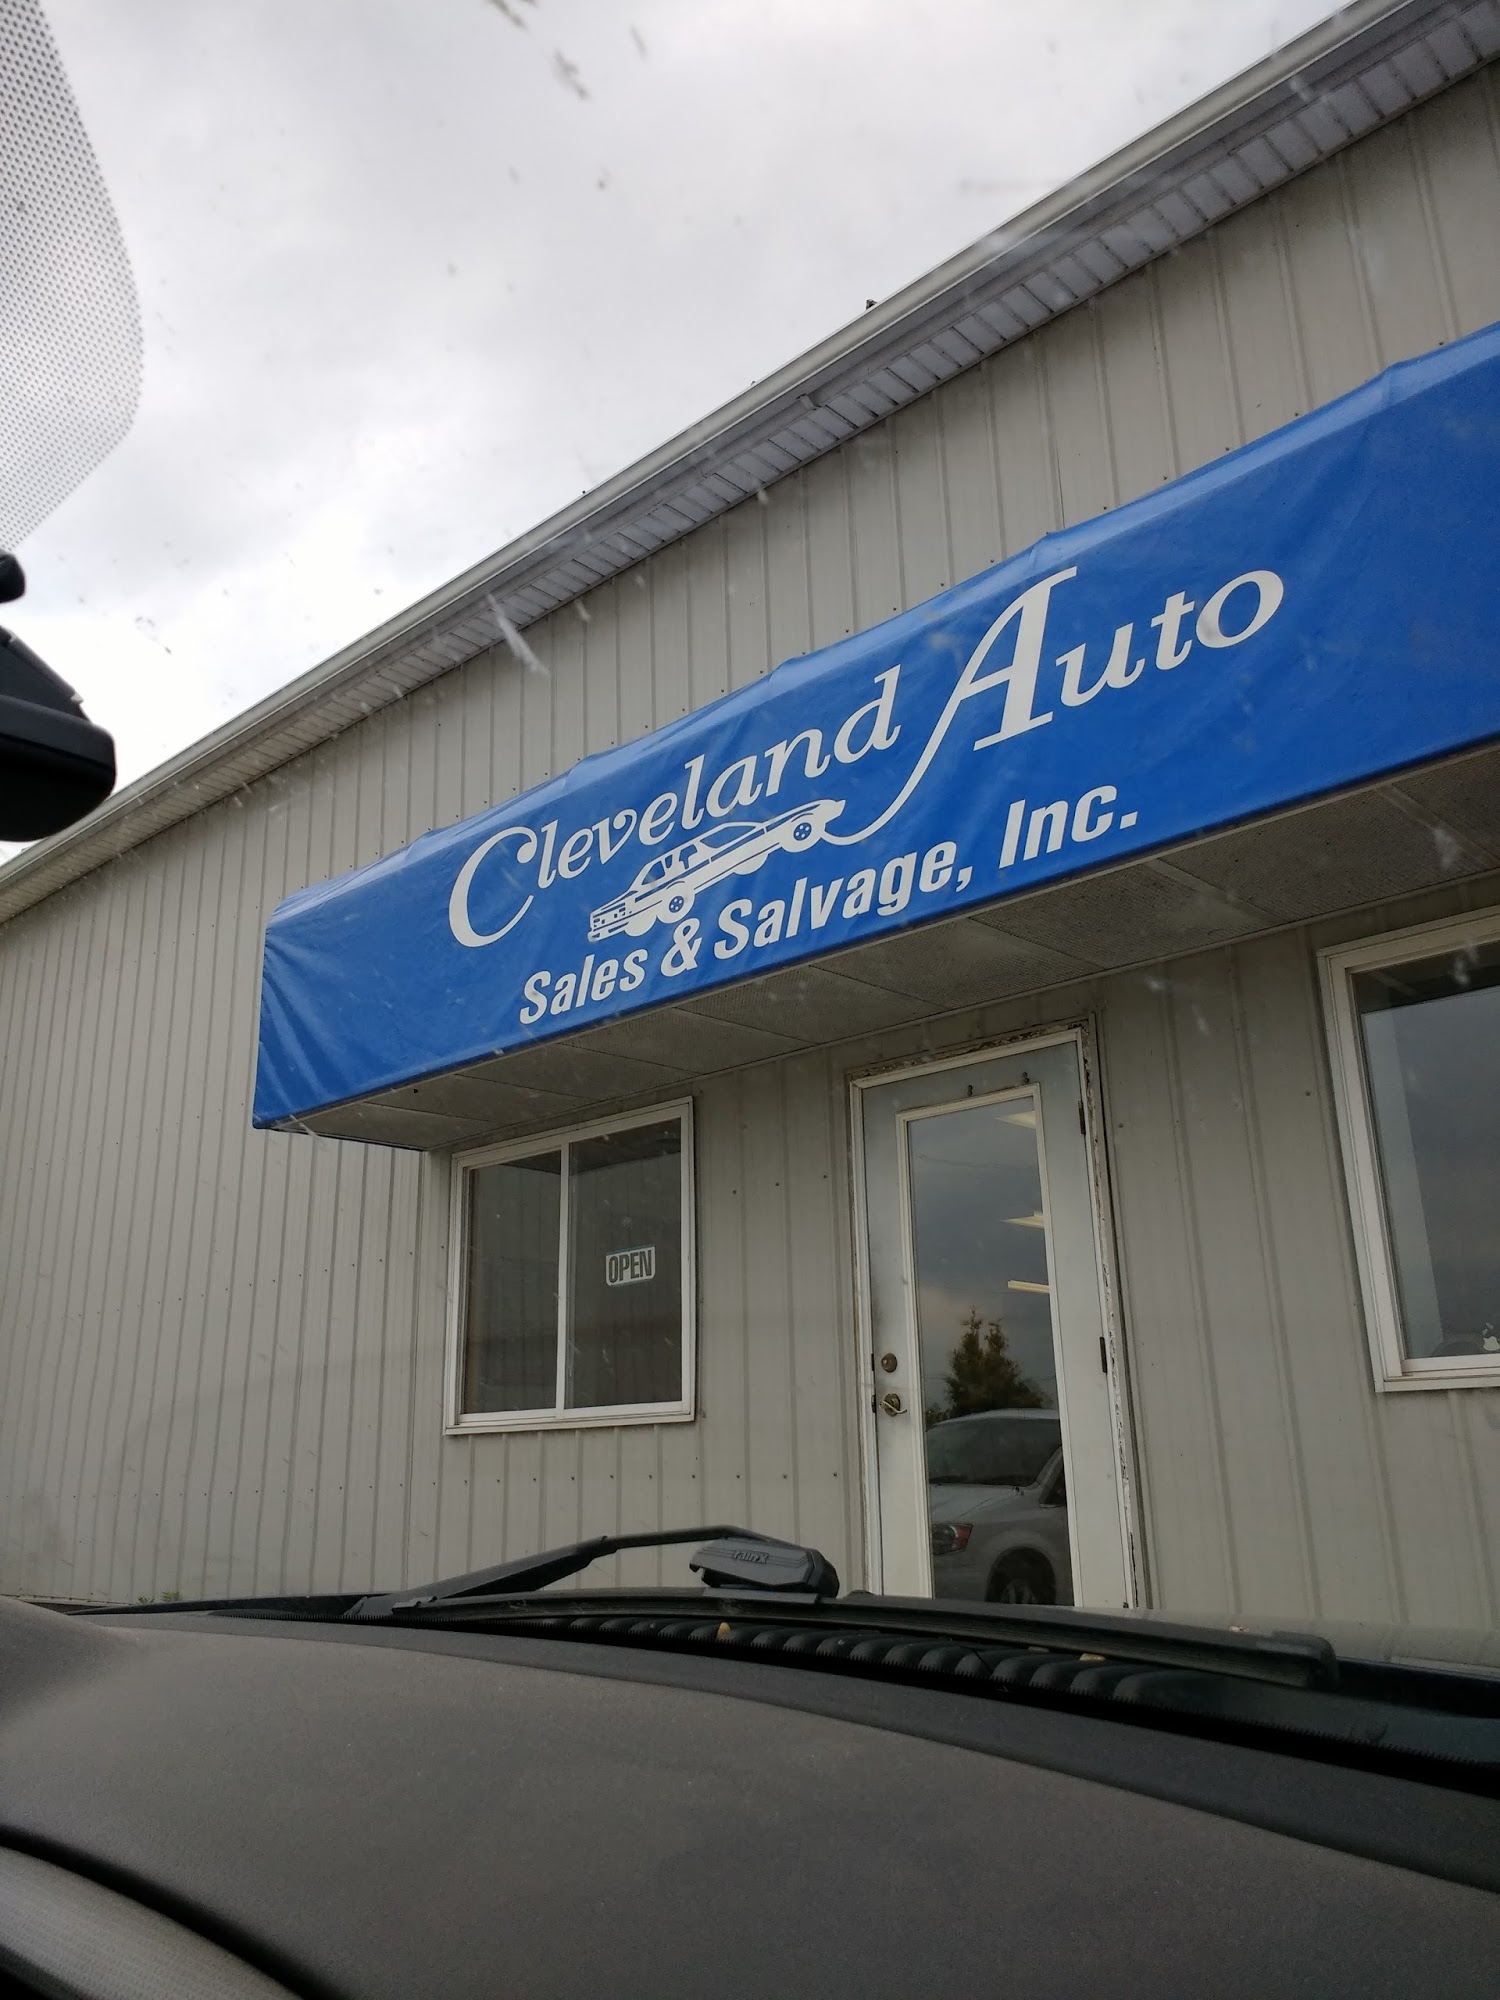 Cleveland Auto Sales & Salvage